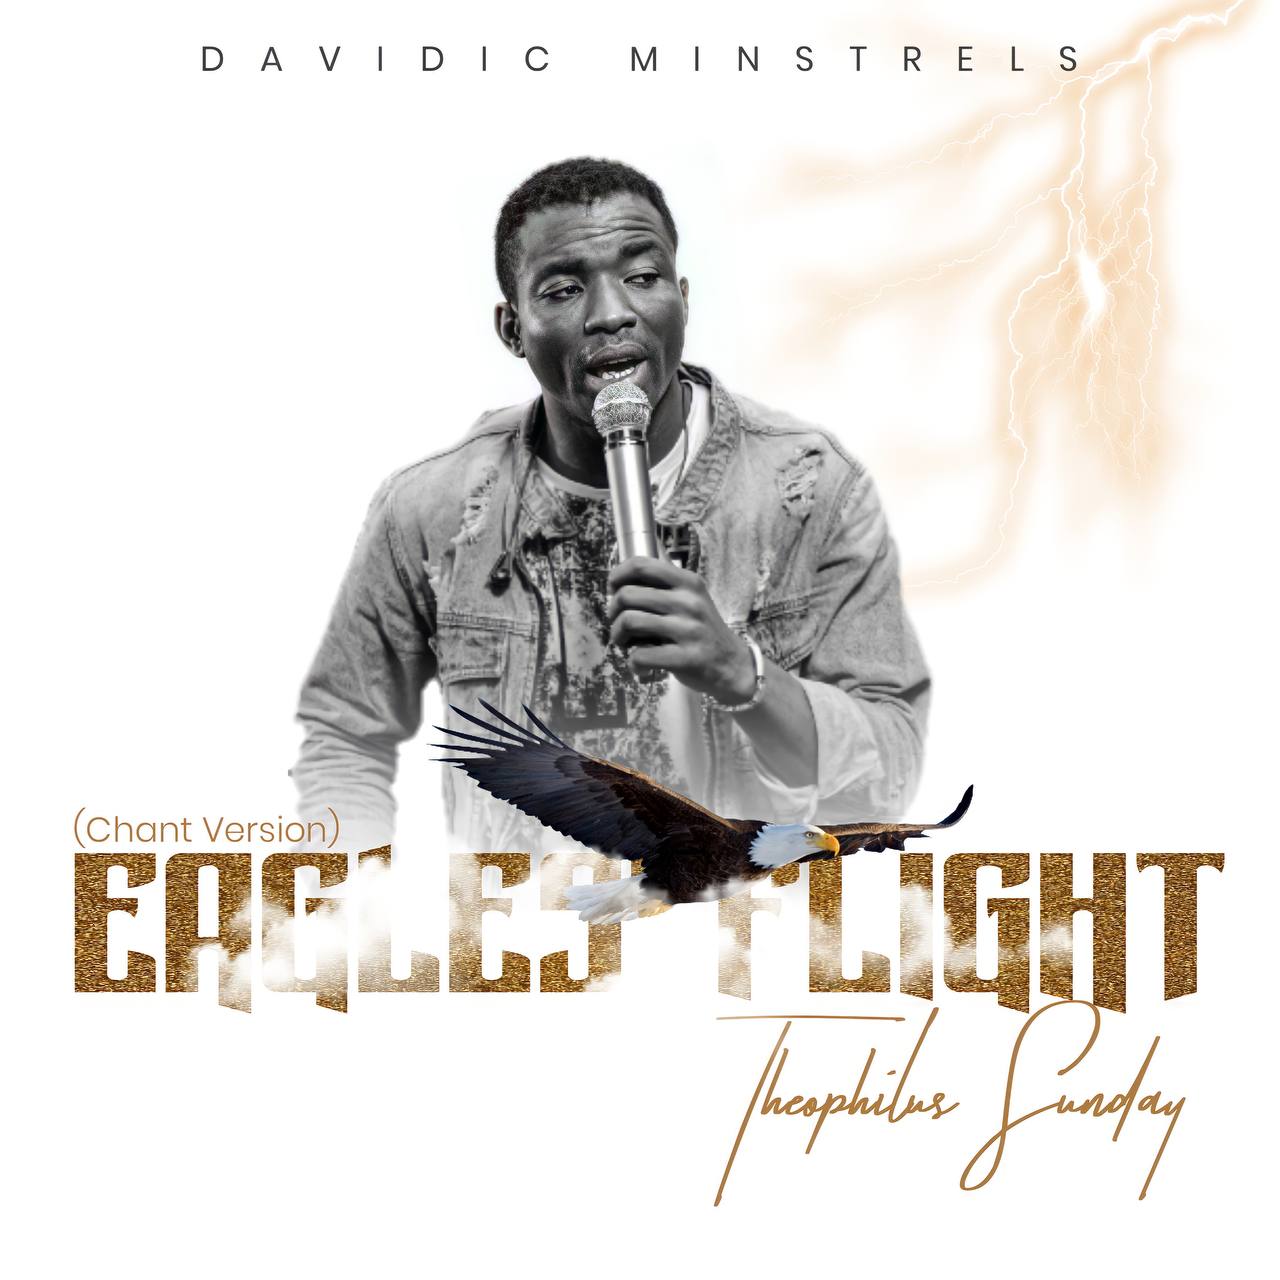 EAGLES FLIGHT Theophilus Sunday Mp3 Download Free (Audio+Lyrics) 18